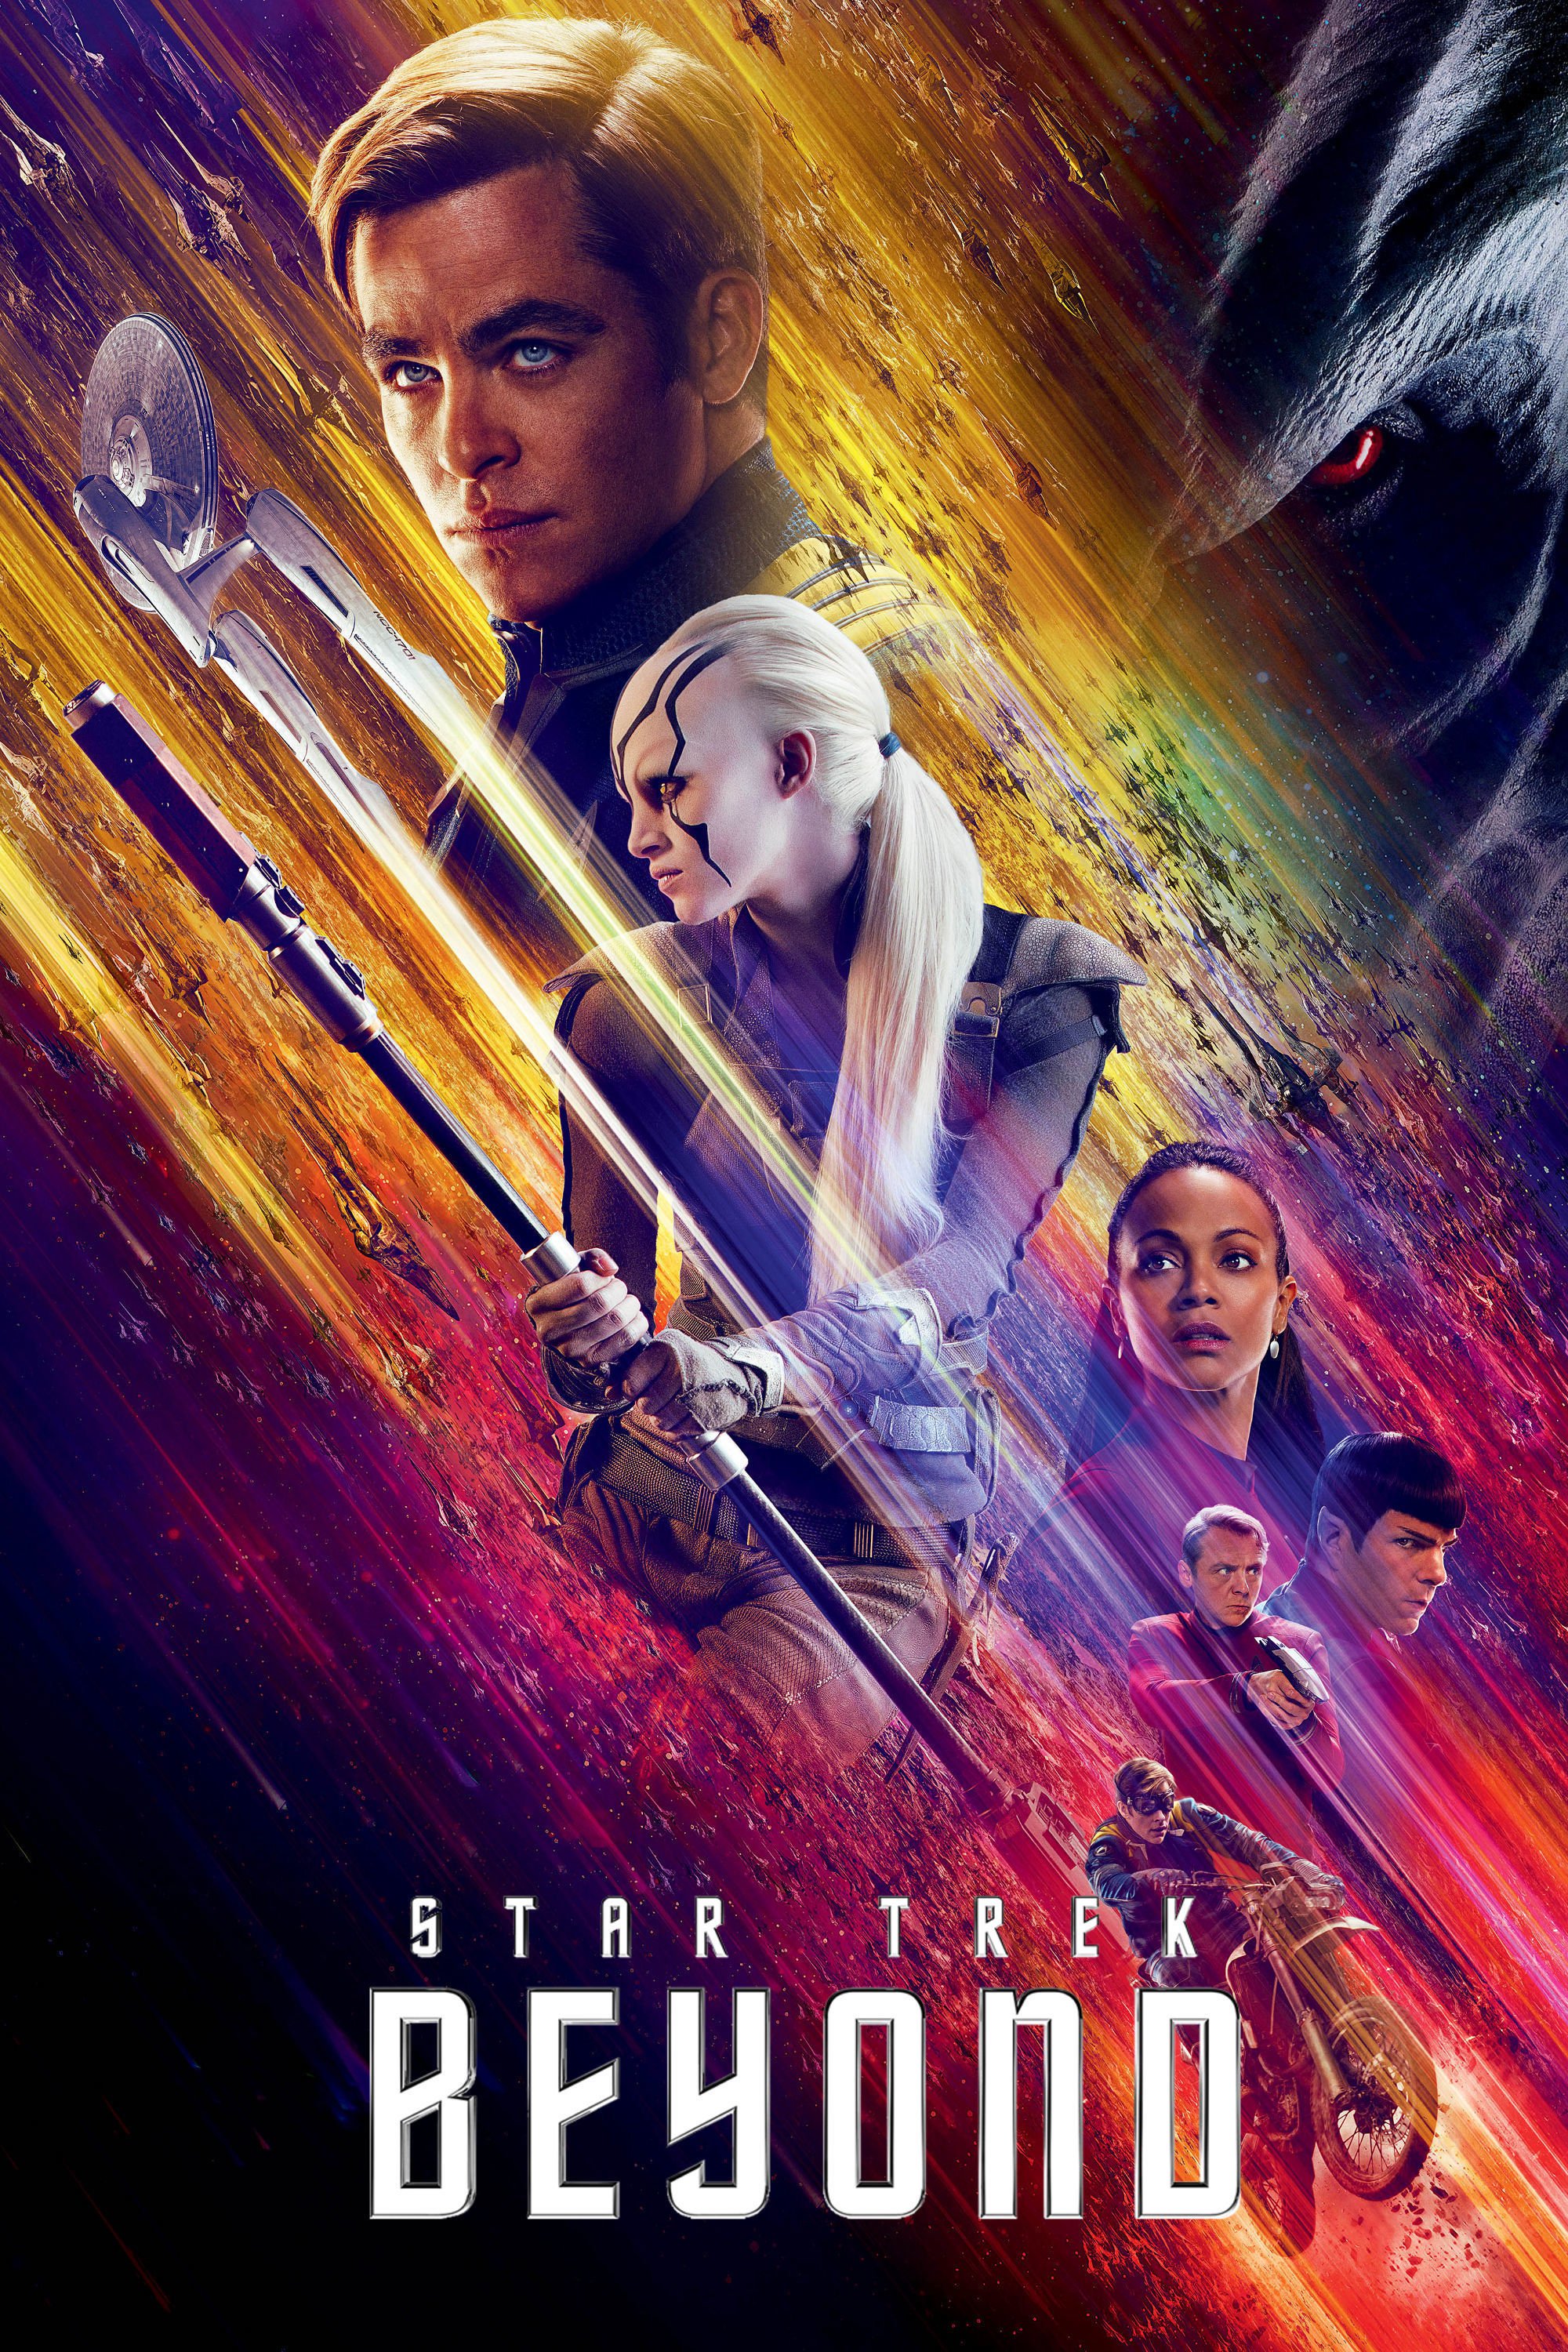 Poster de la película "Star Trek Beyond"